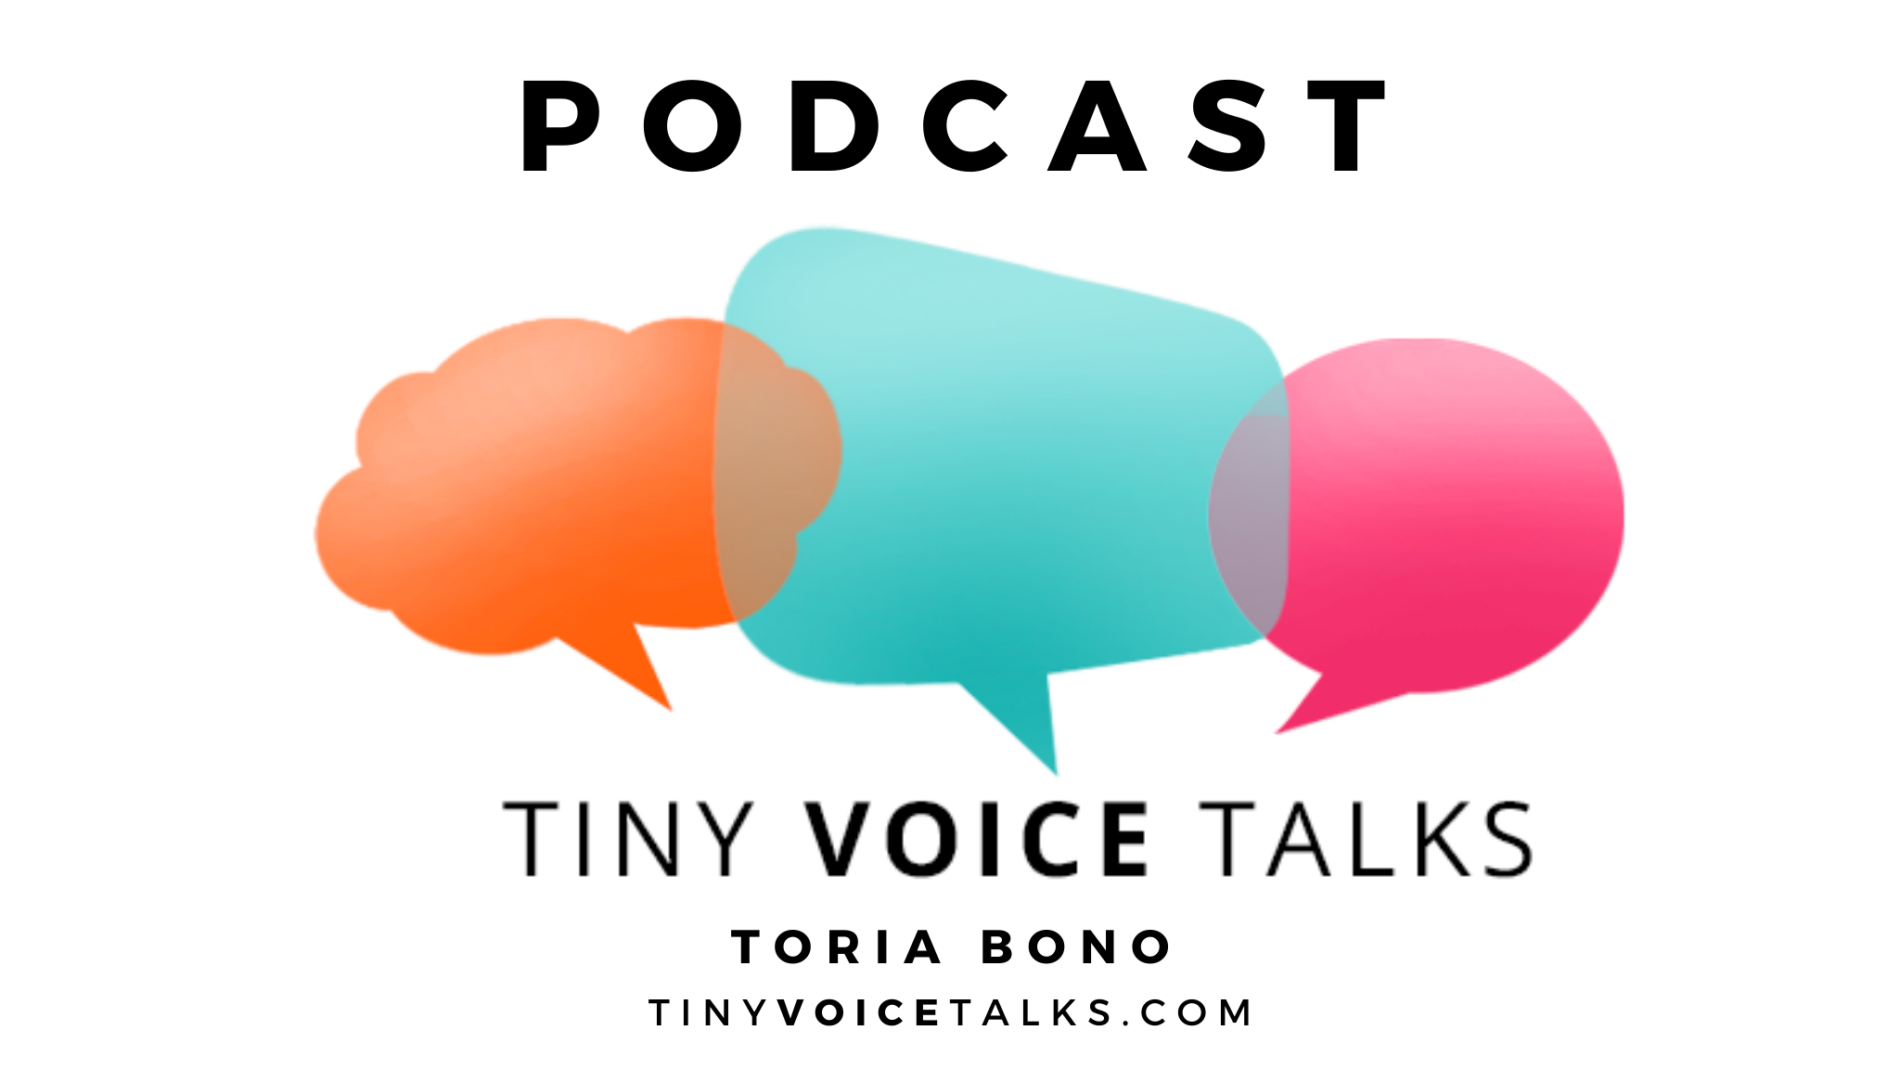 Tiny Voice Talks podcast logo. Features three speech bubbles - orange, turquoise and pink. The text below reads Tiny Voice Talks | Toria Bono | tinyvoicetalks.com